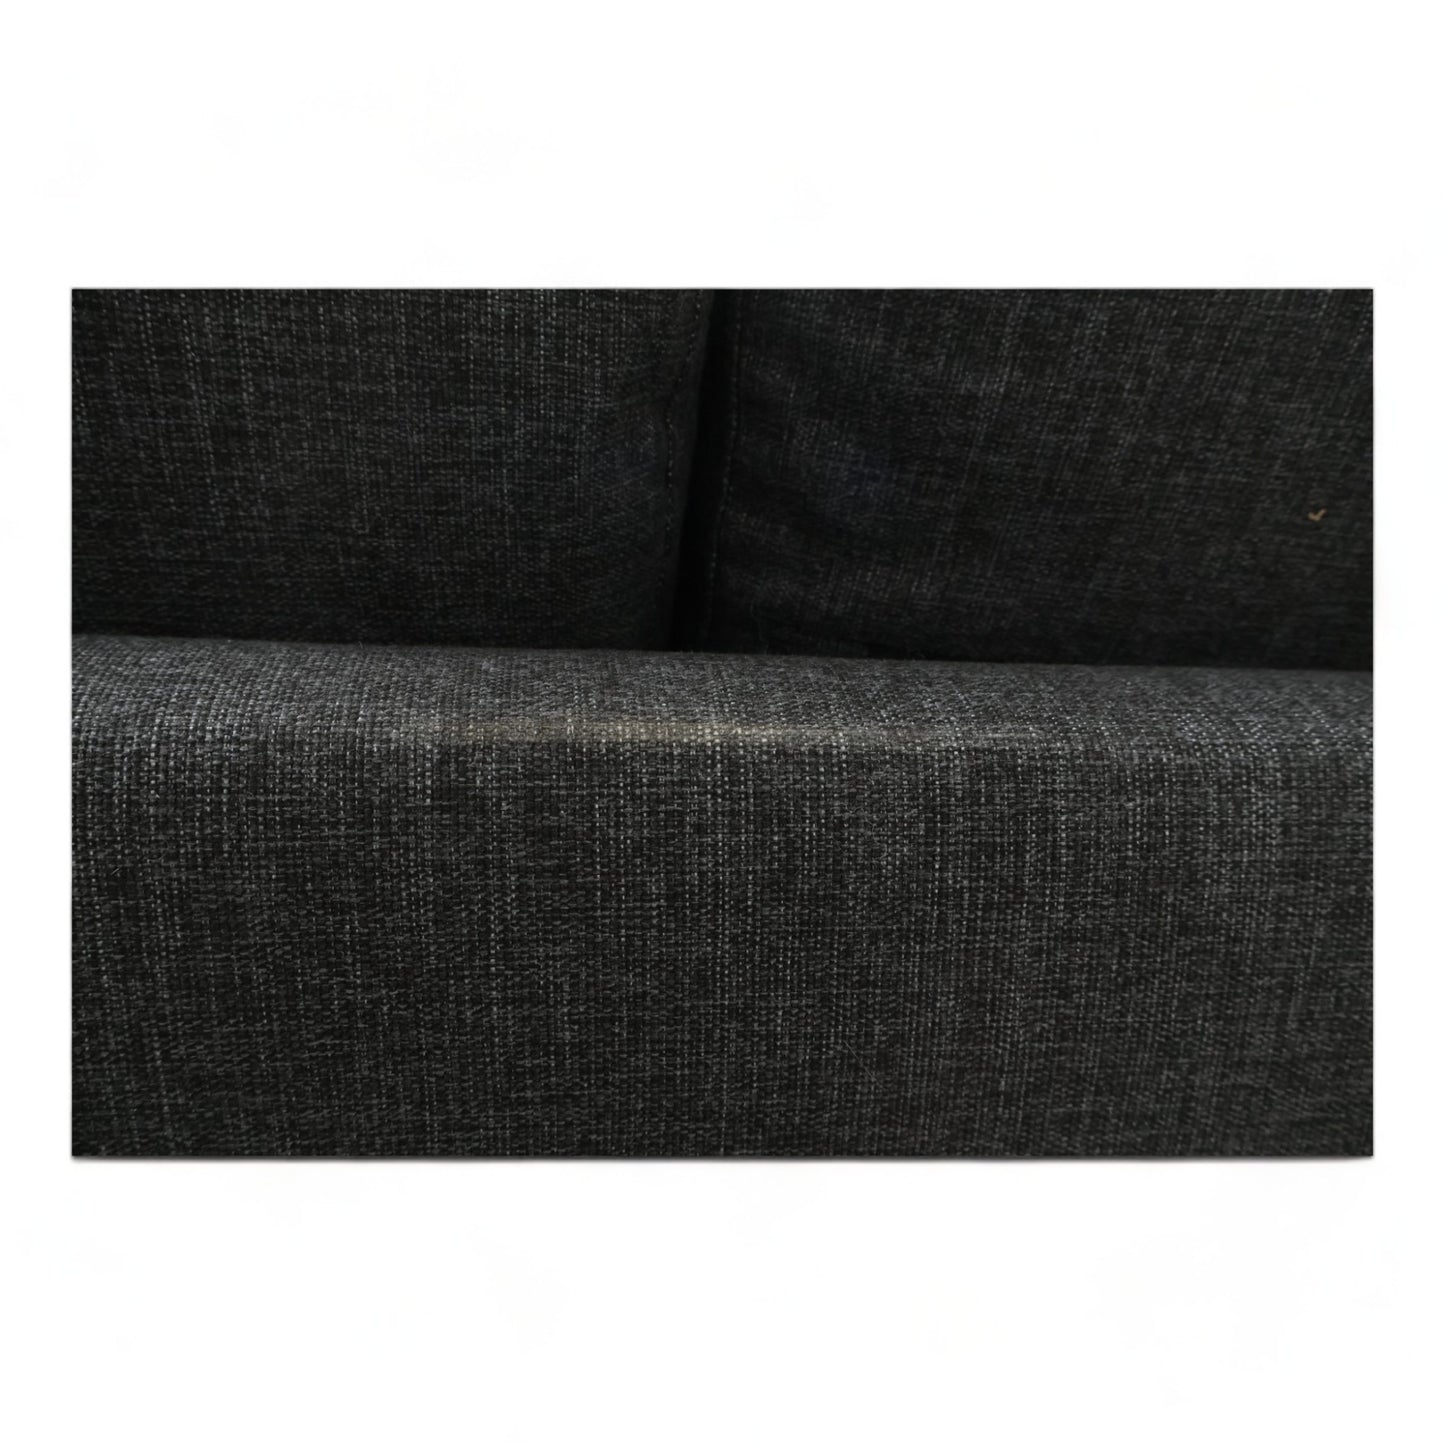 Nyrenset | Grå U-sofa med sjeselong